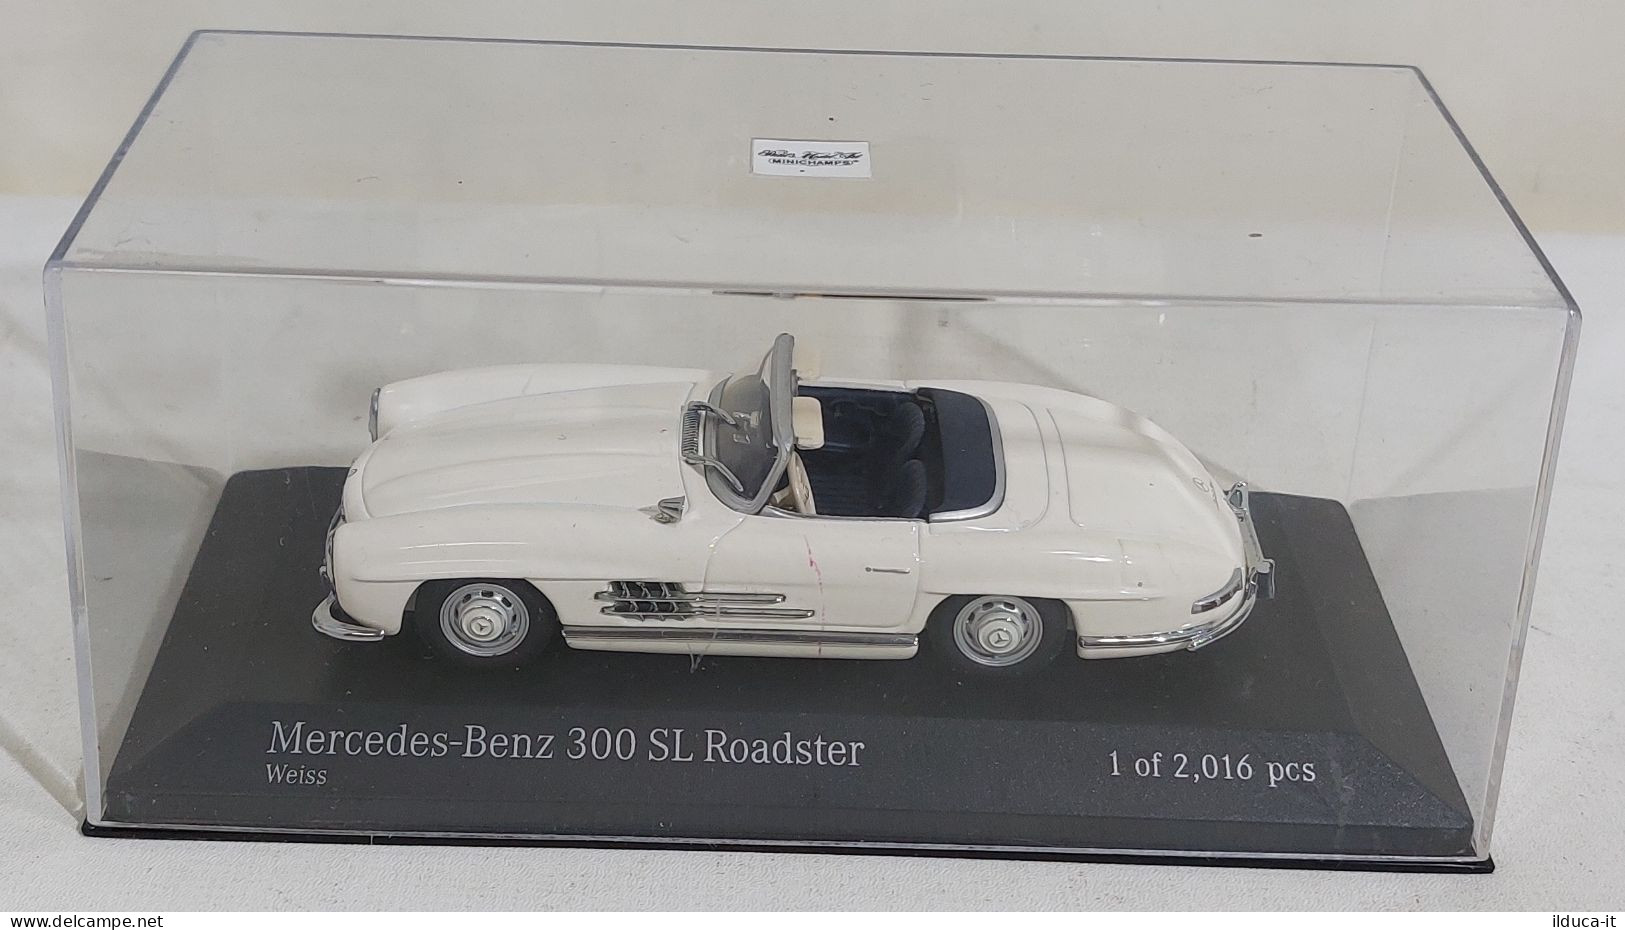 54279 MINICHAMPS Paul's Model Art 1/43 - Mercedes-Benz 300 SL Roadster - Minichamps